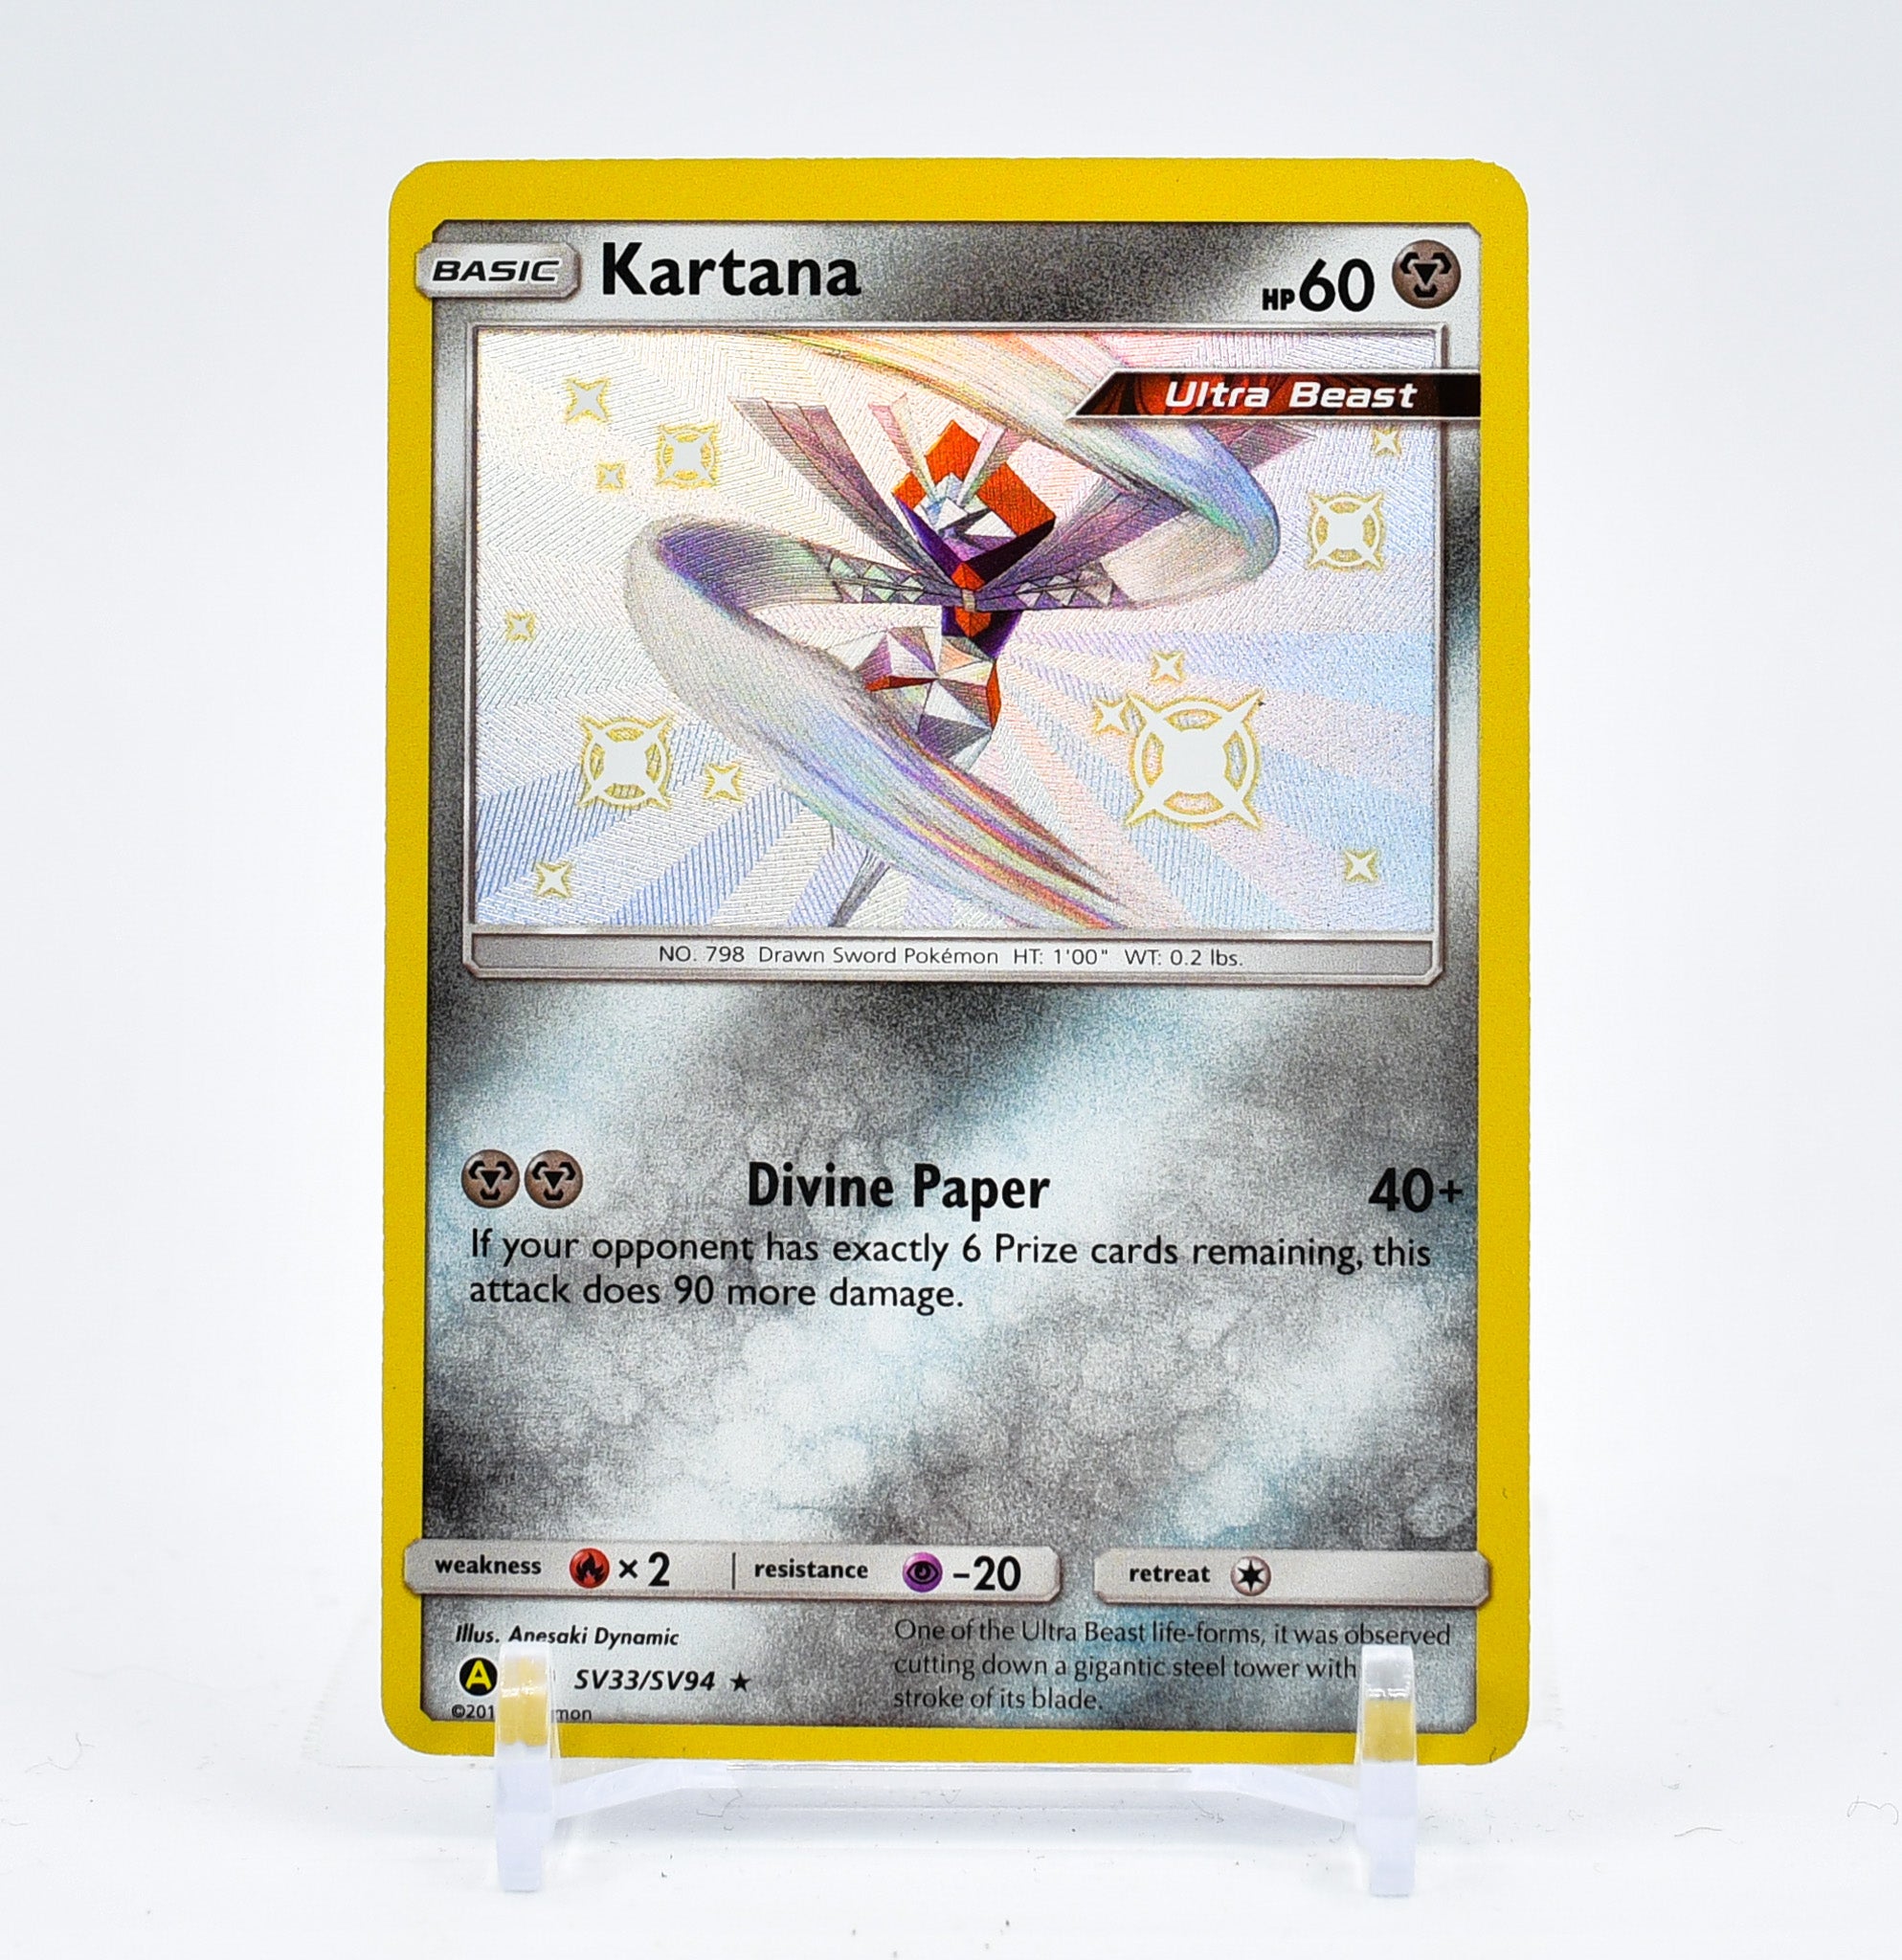 Kartana - SV33/SV94 - Shiny Holo Rare - Pokemon Singles